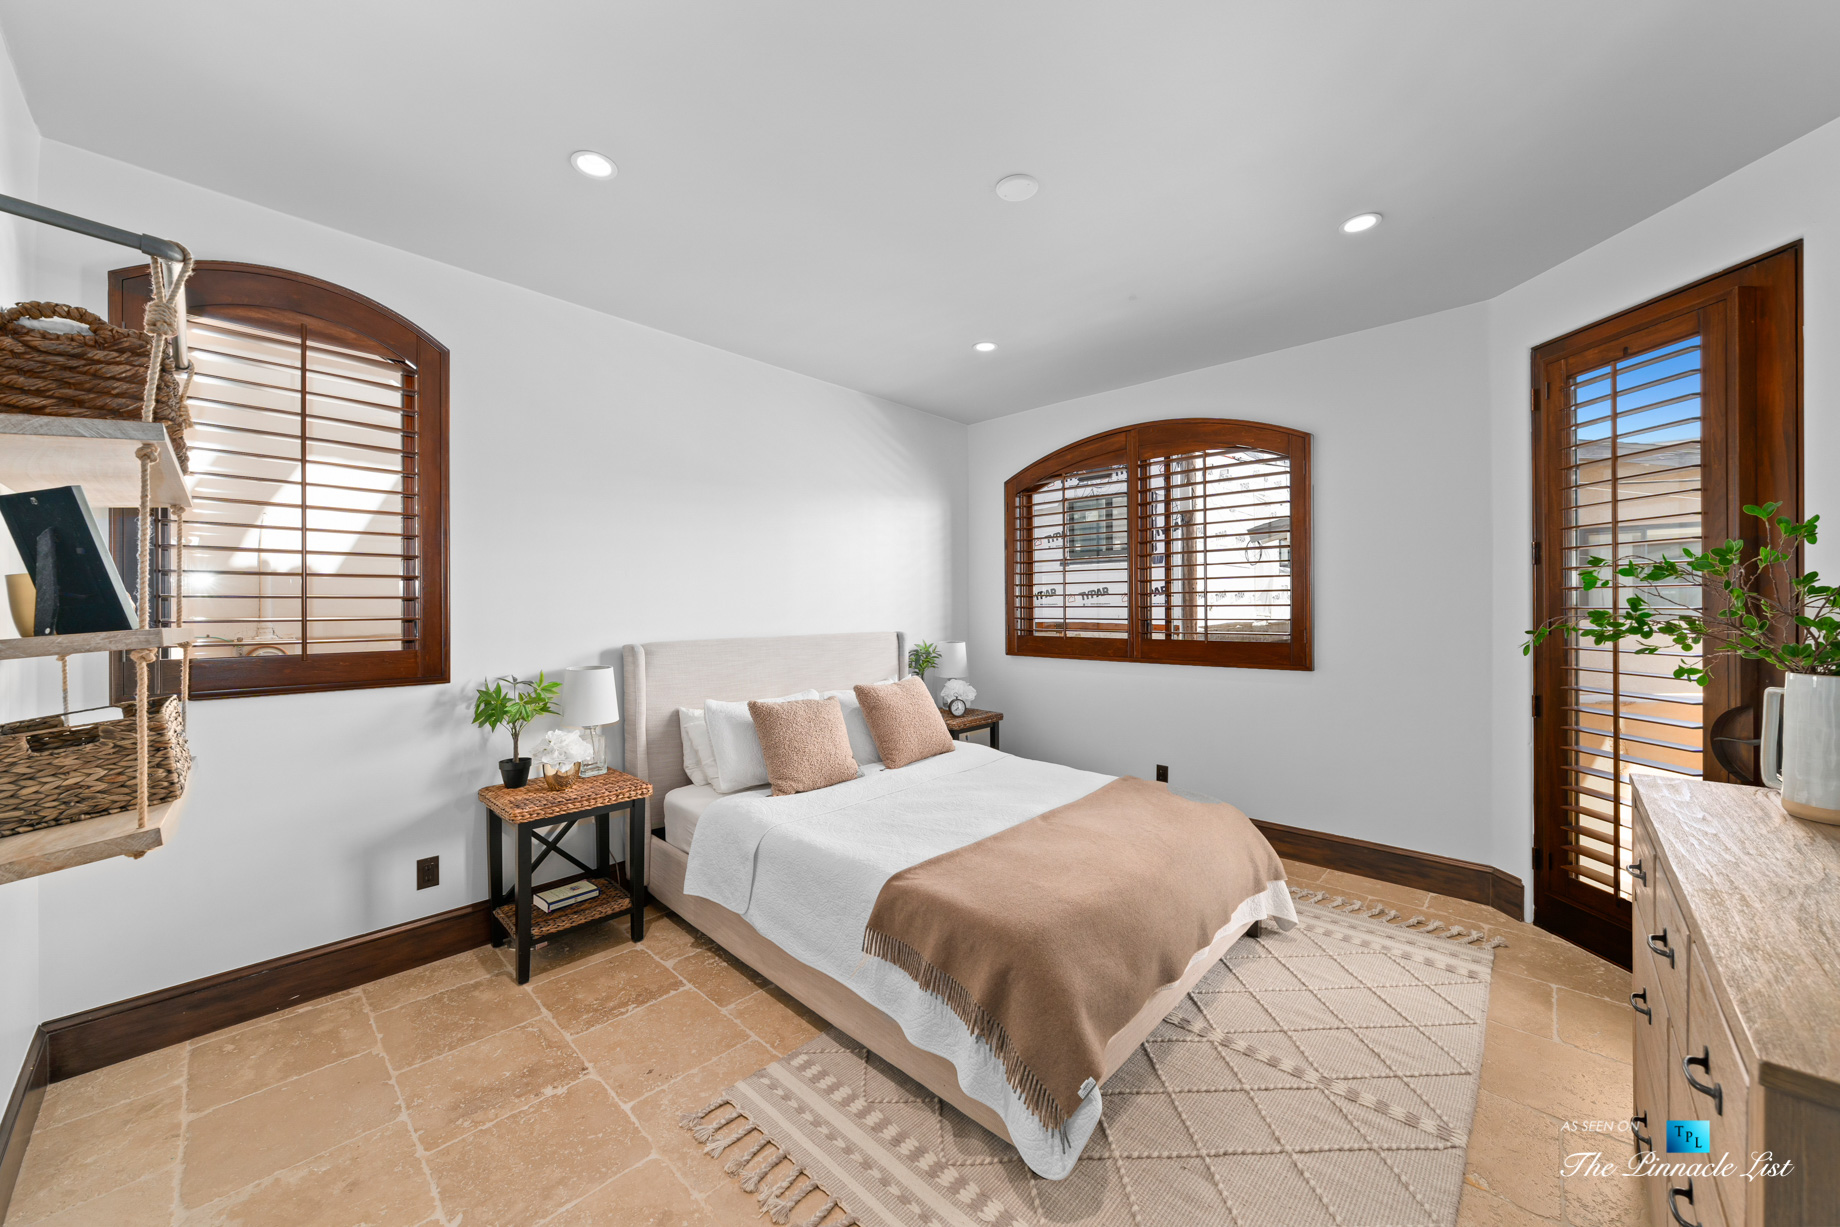 216 7th St, Manhattan Beach, CA, USA - Luxury Real Estate - Coastal Villa Home - Guest Bedroom